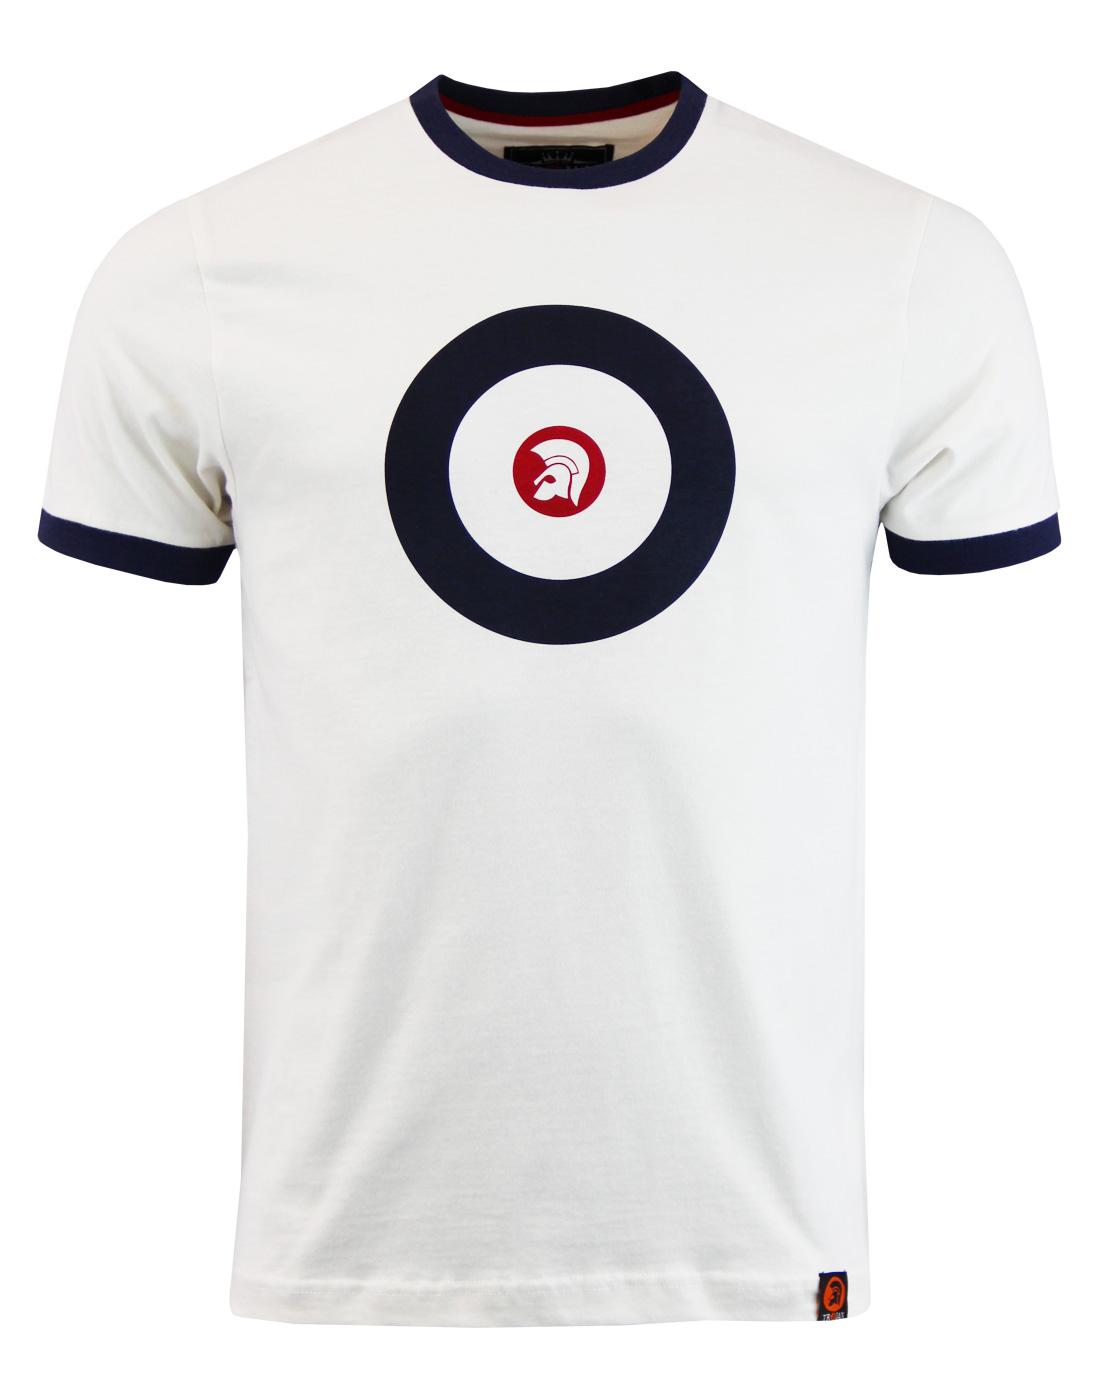 TROJAN RECORDS Helmet Logo Mod Target T-Shirt (E)